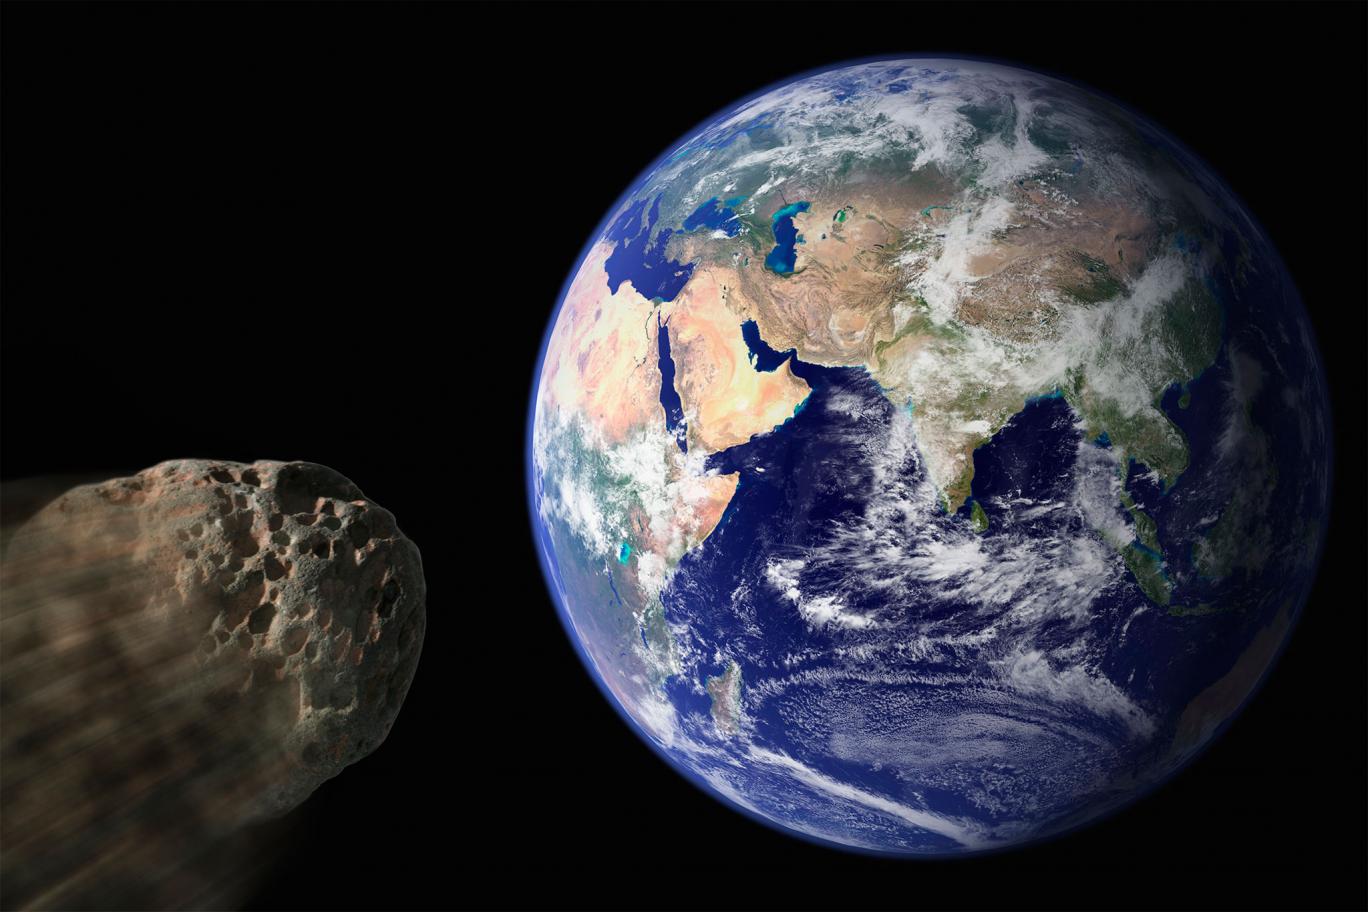 Asteroid 2011 UW-158 